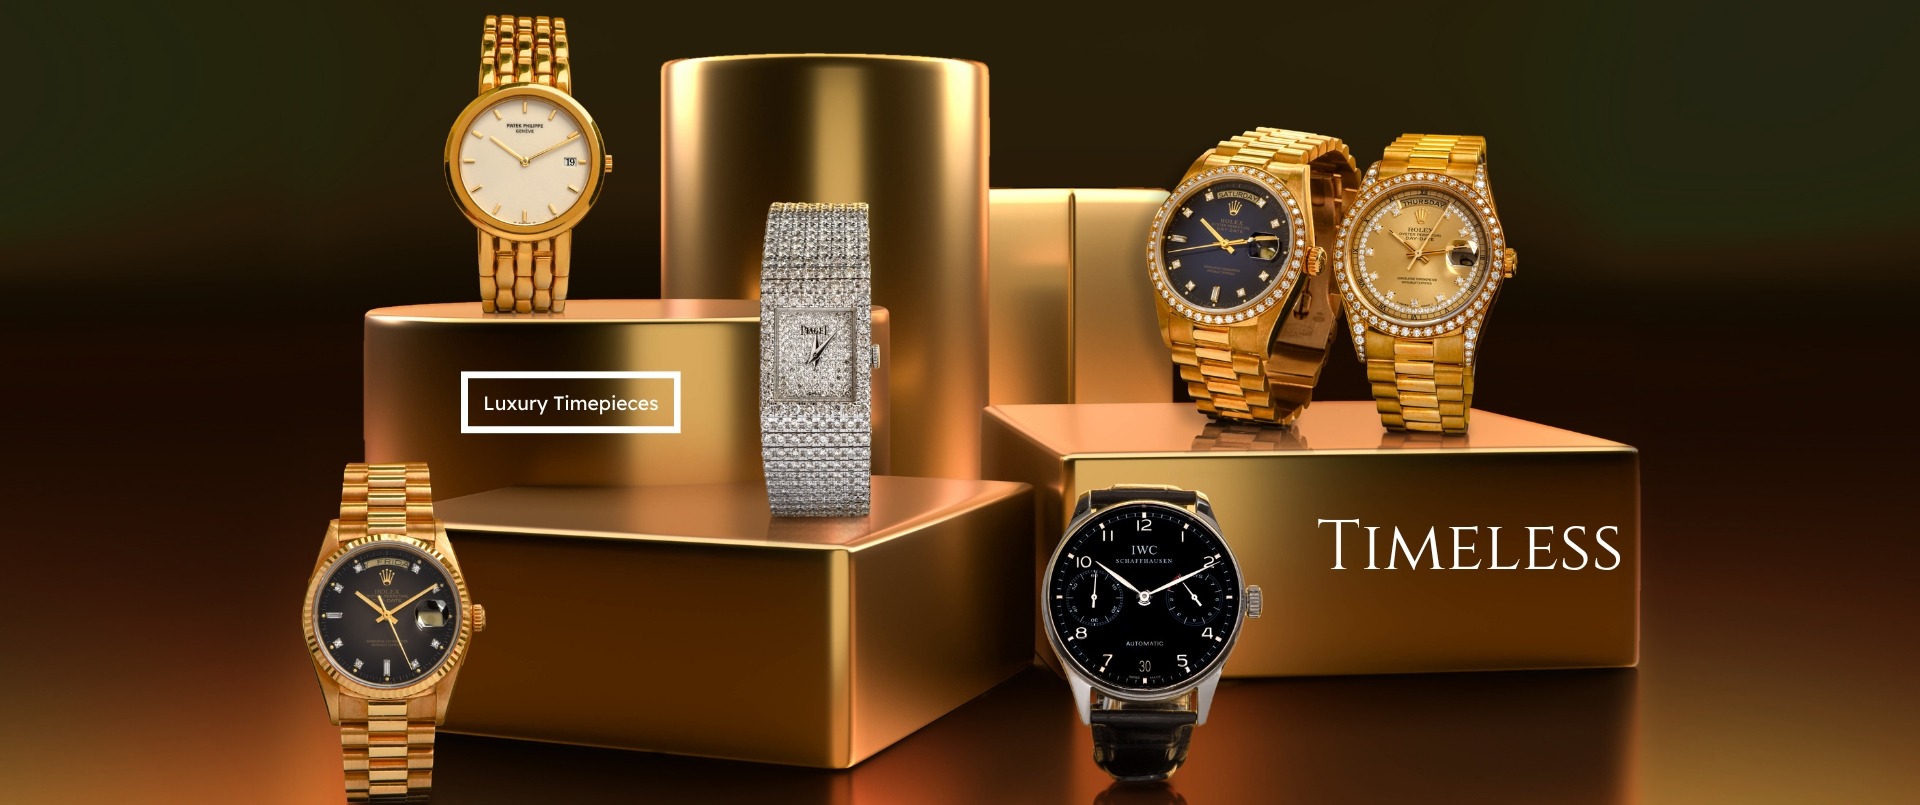 luxury timepieces